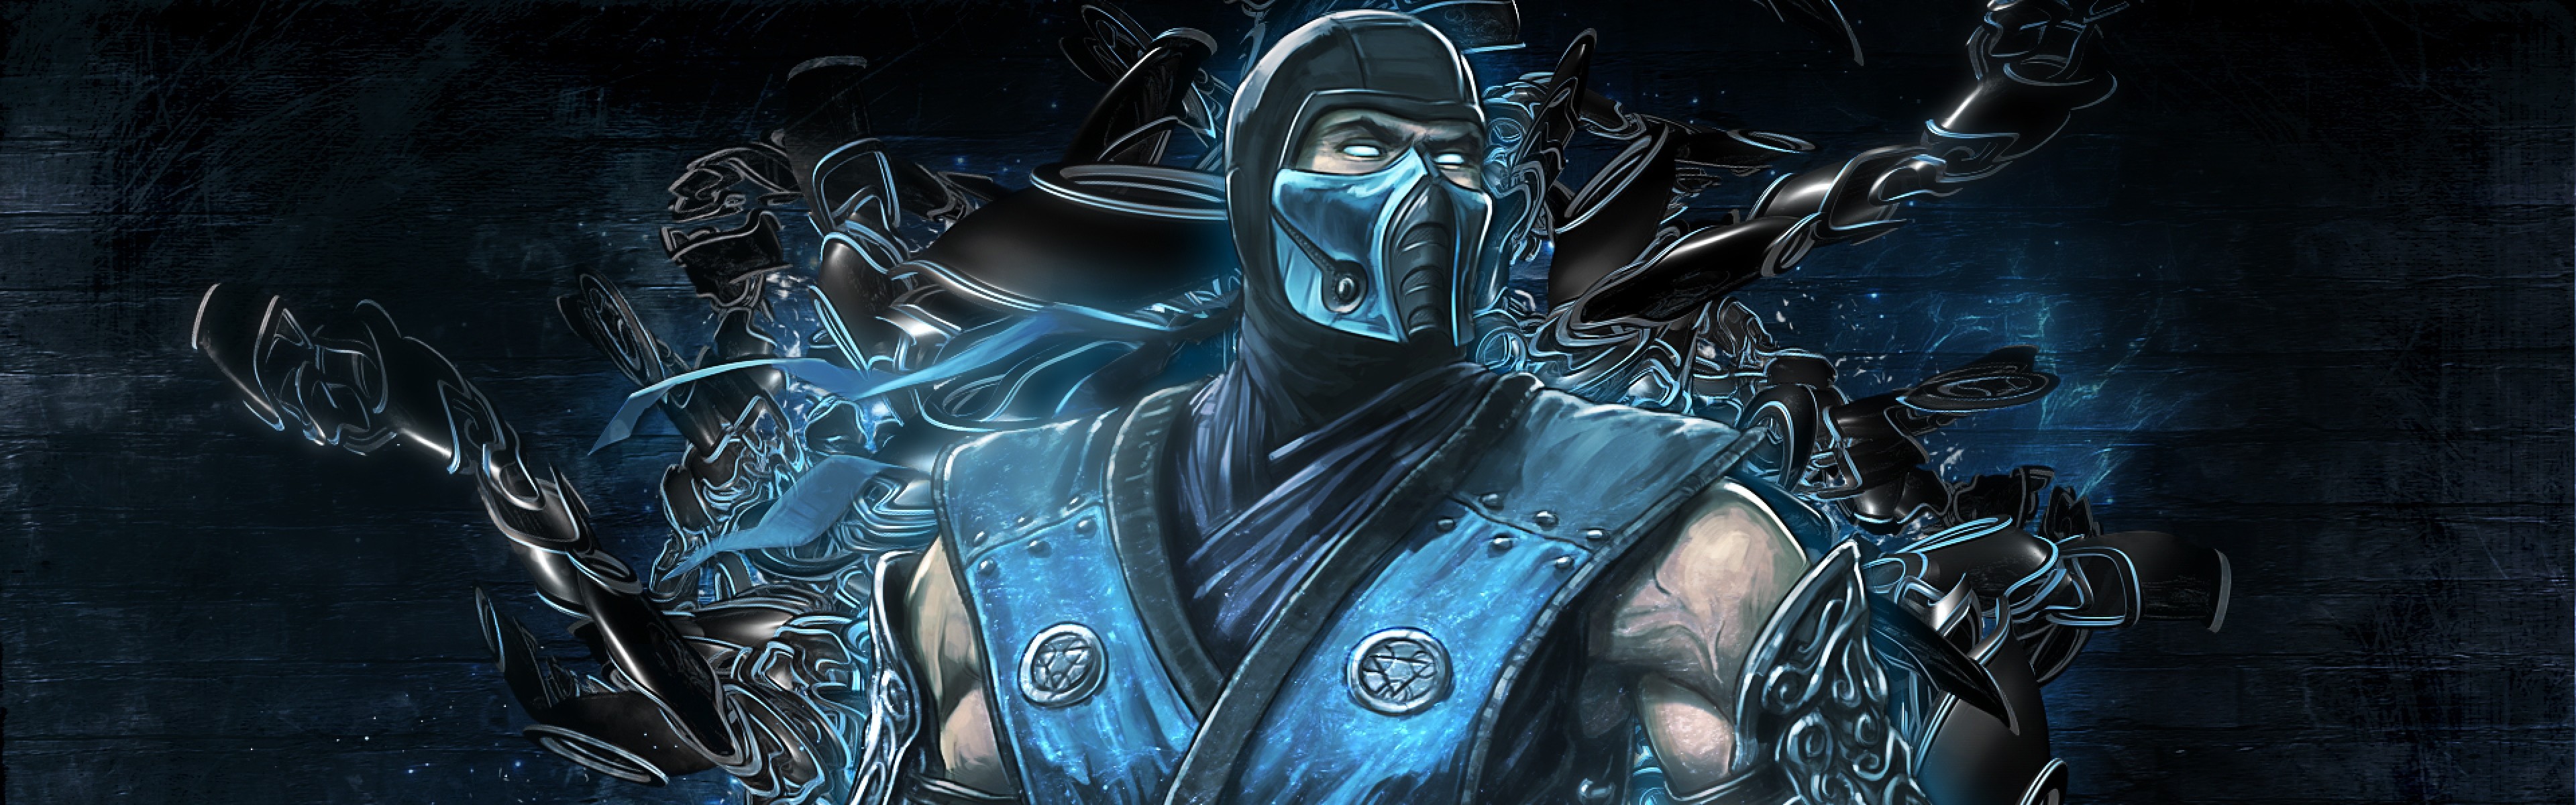 Imagenes Hd Mortal Kombat - HD Wallpaper 